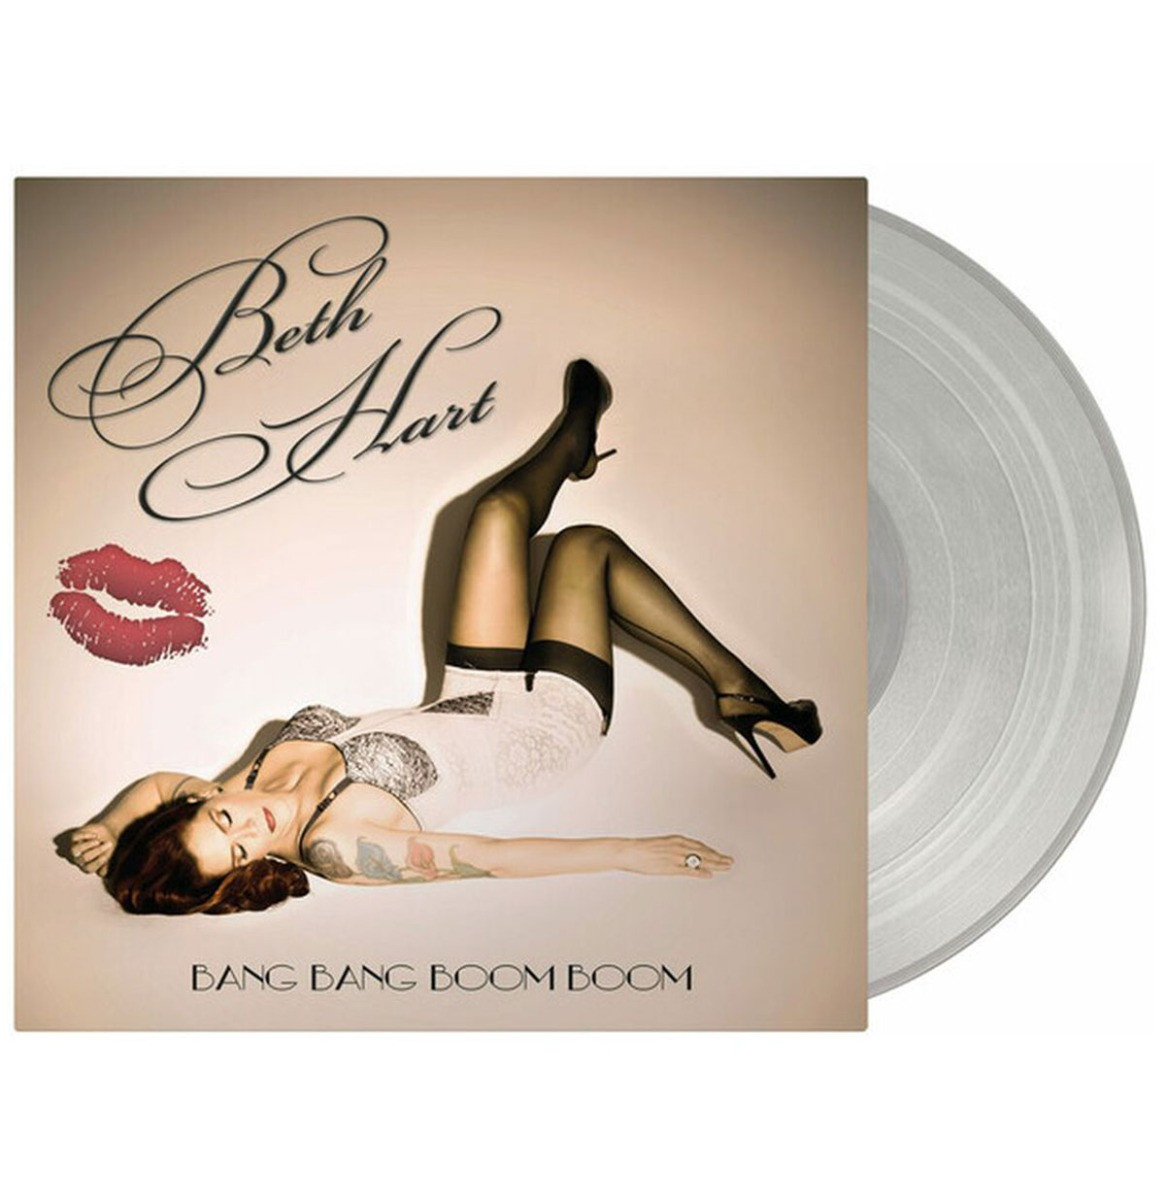 Beth Hart - Bang Bang Boom Boom (Transparant Vinyl) LP